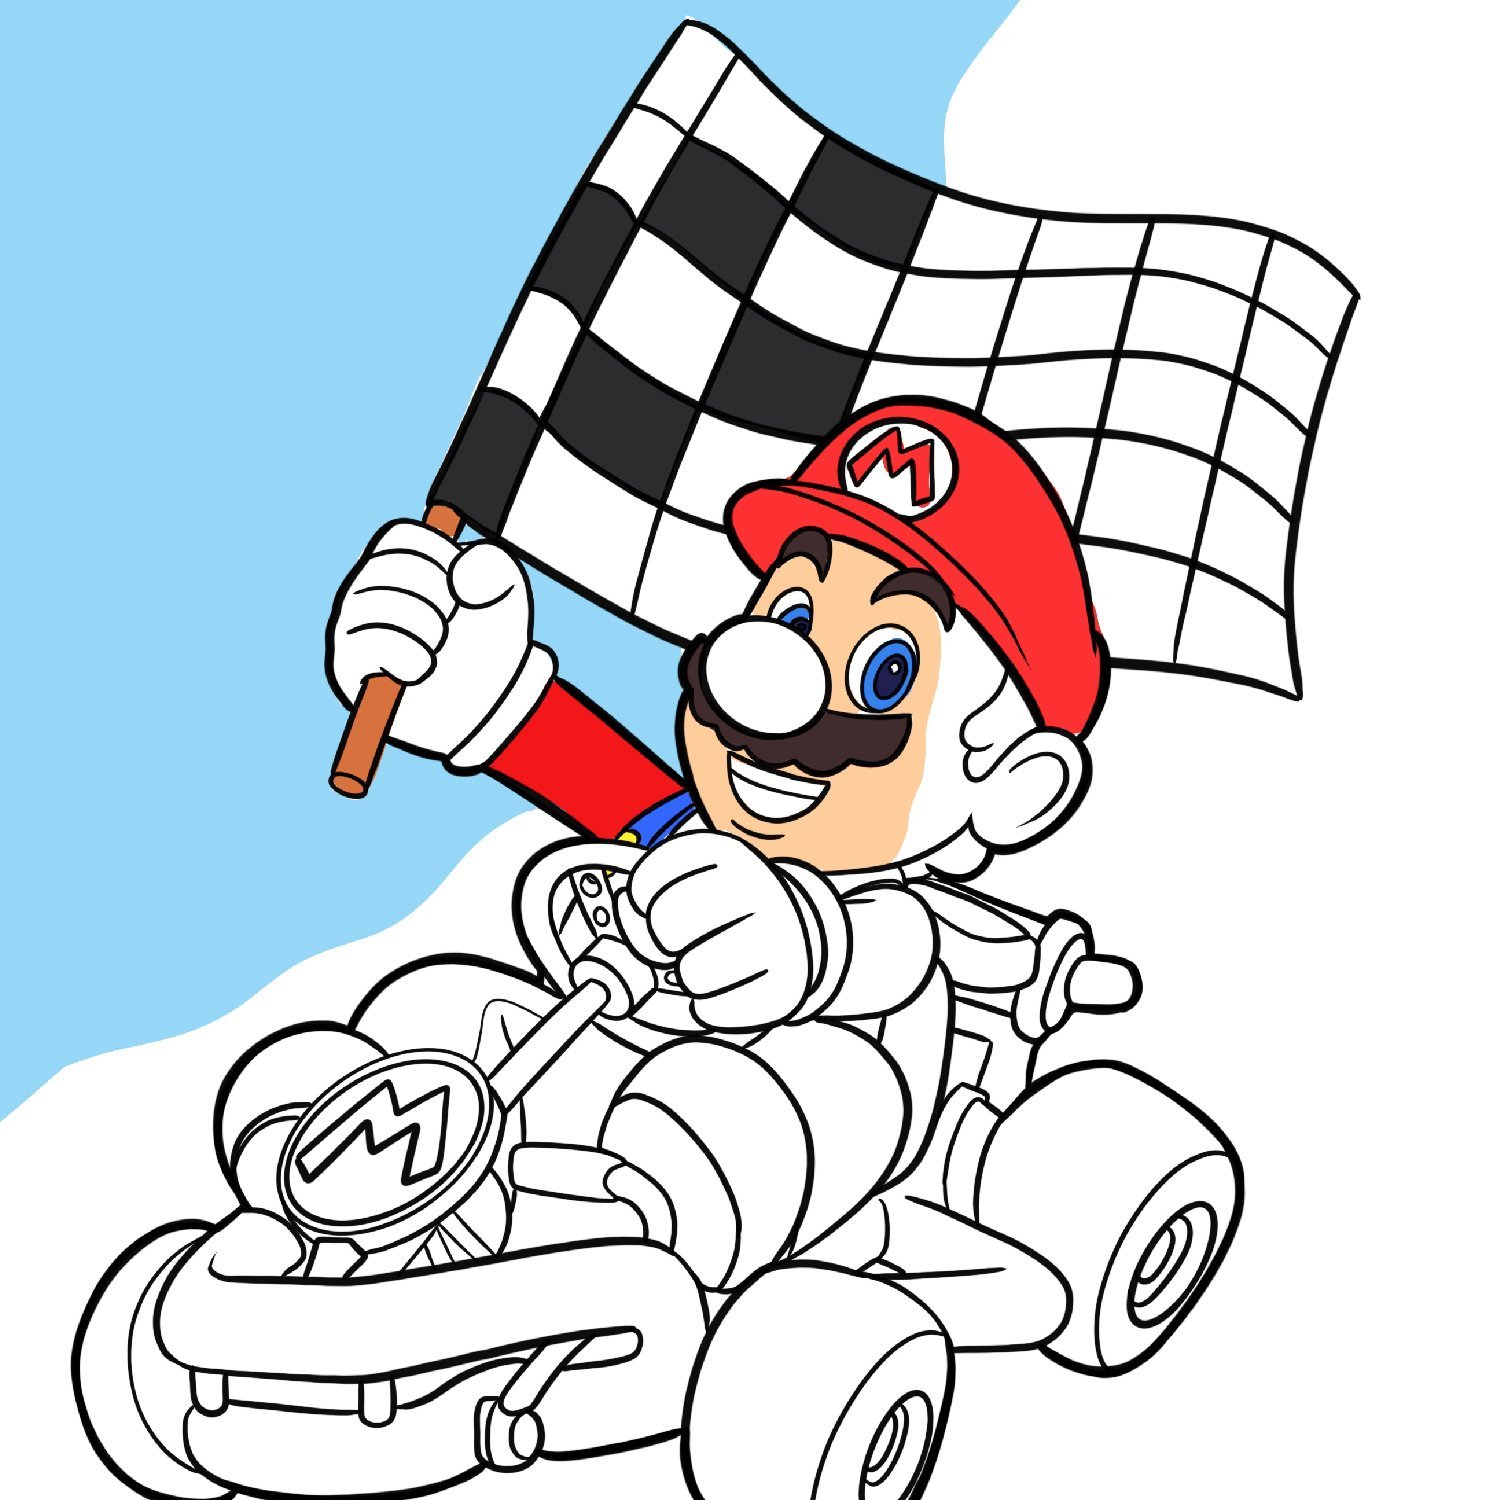 Mario kart coloring page